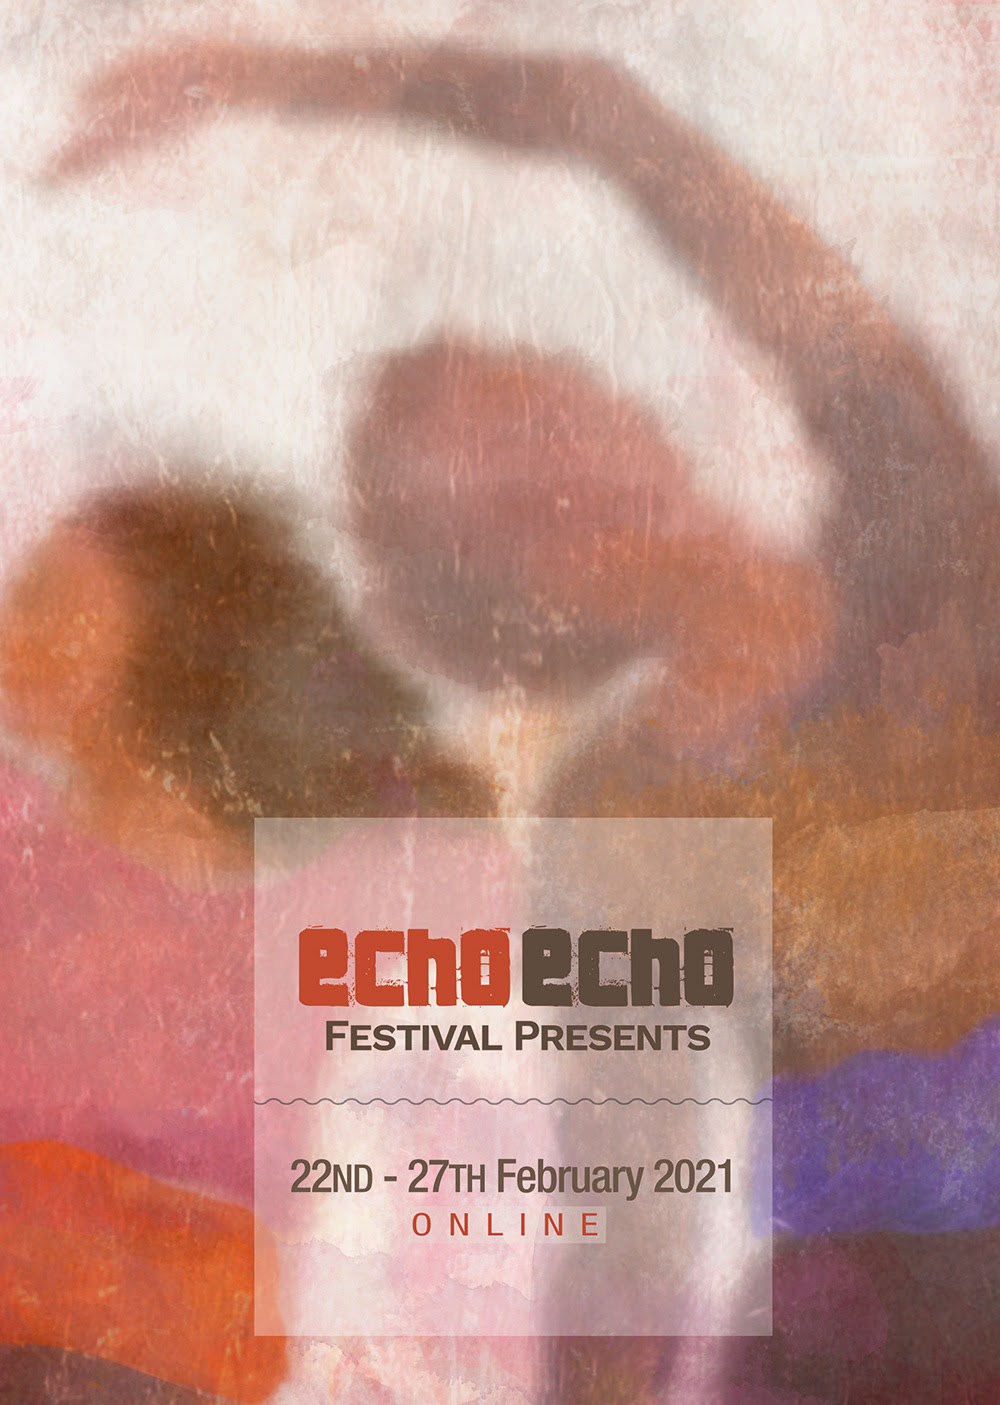 Echo Echo Festival Presents artwork